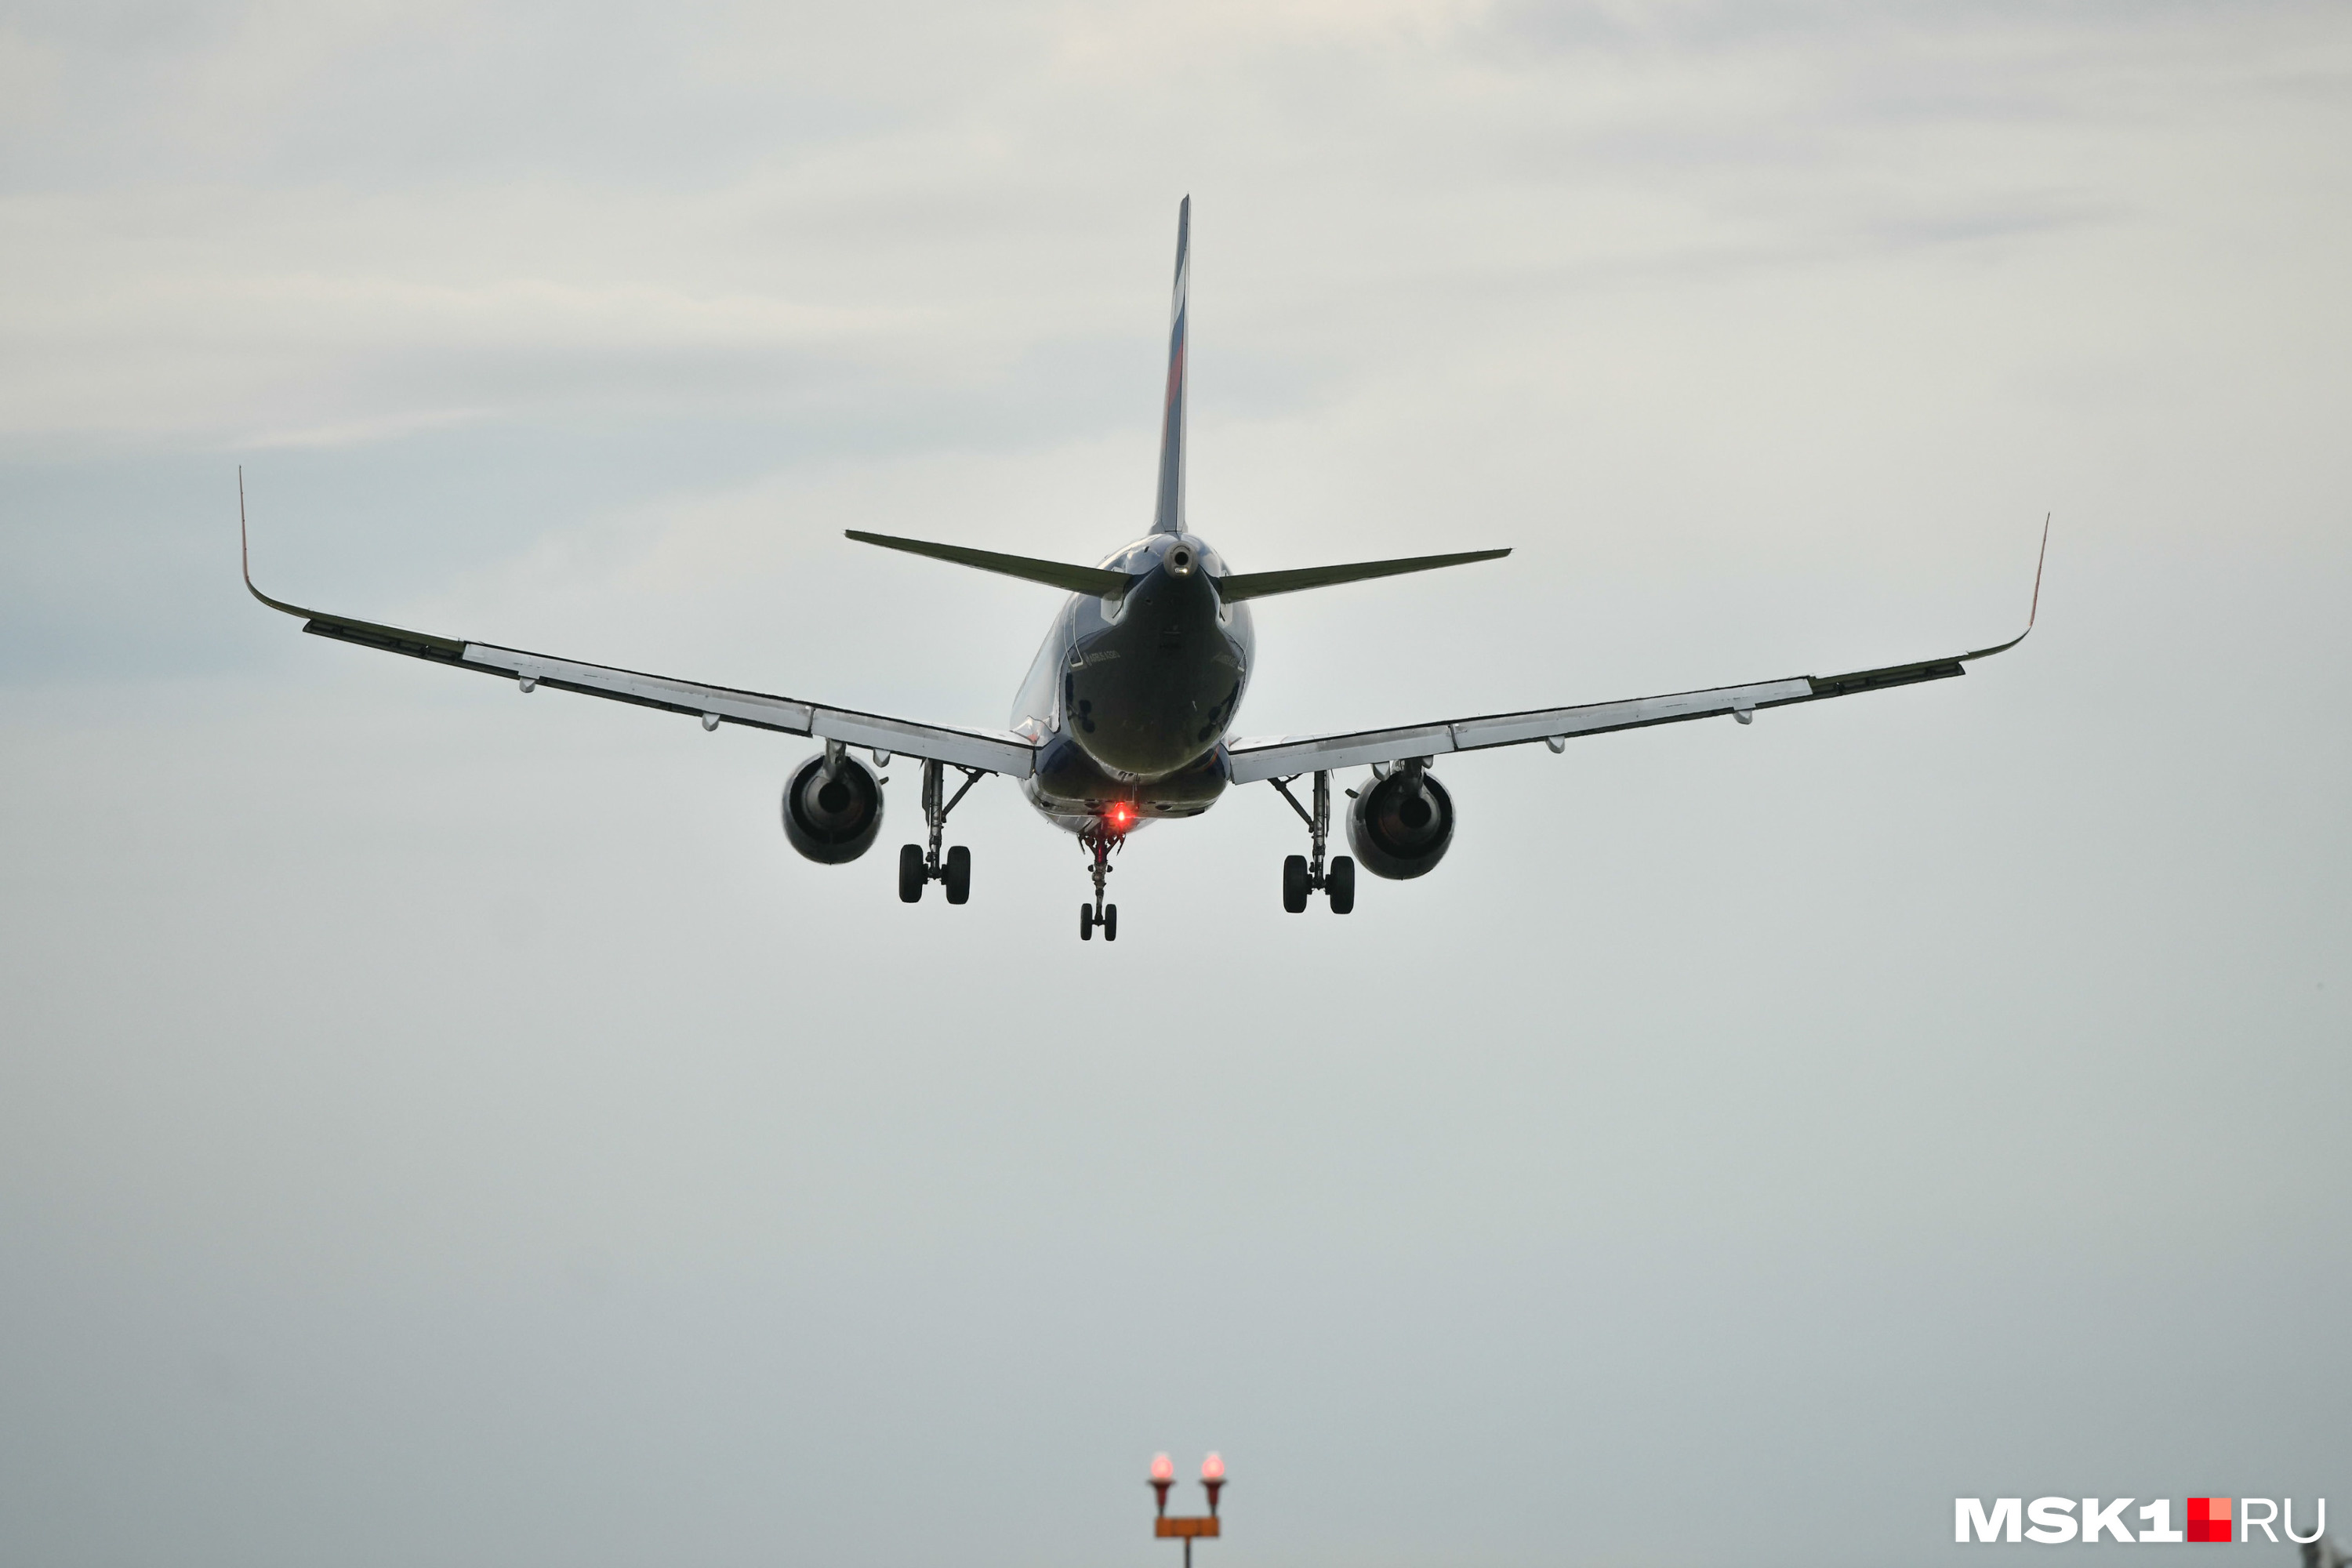 Всего два пассажира прилетели на самолете из Бишкека в Иркутск